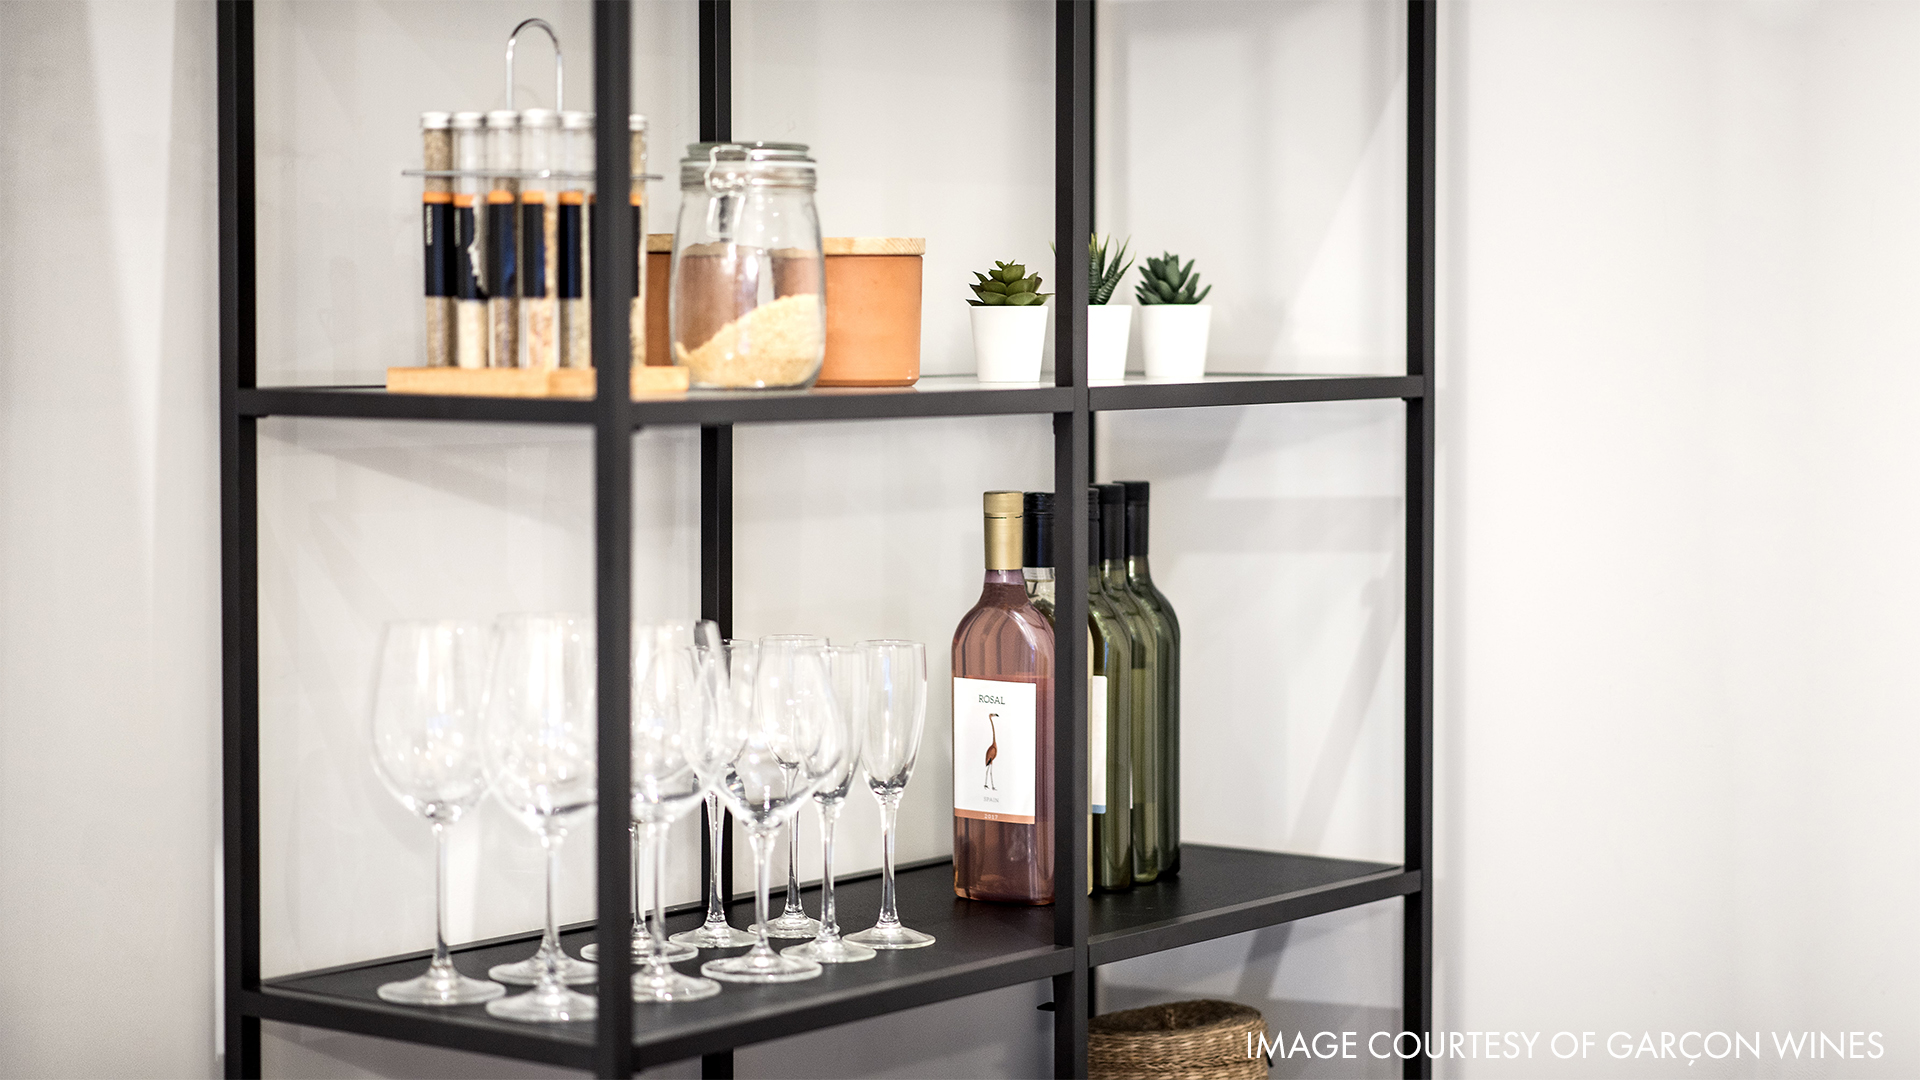 sustainable-flat-wine-bottles-on-shelf.jpg